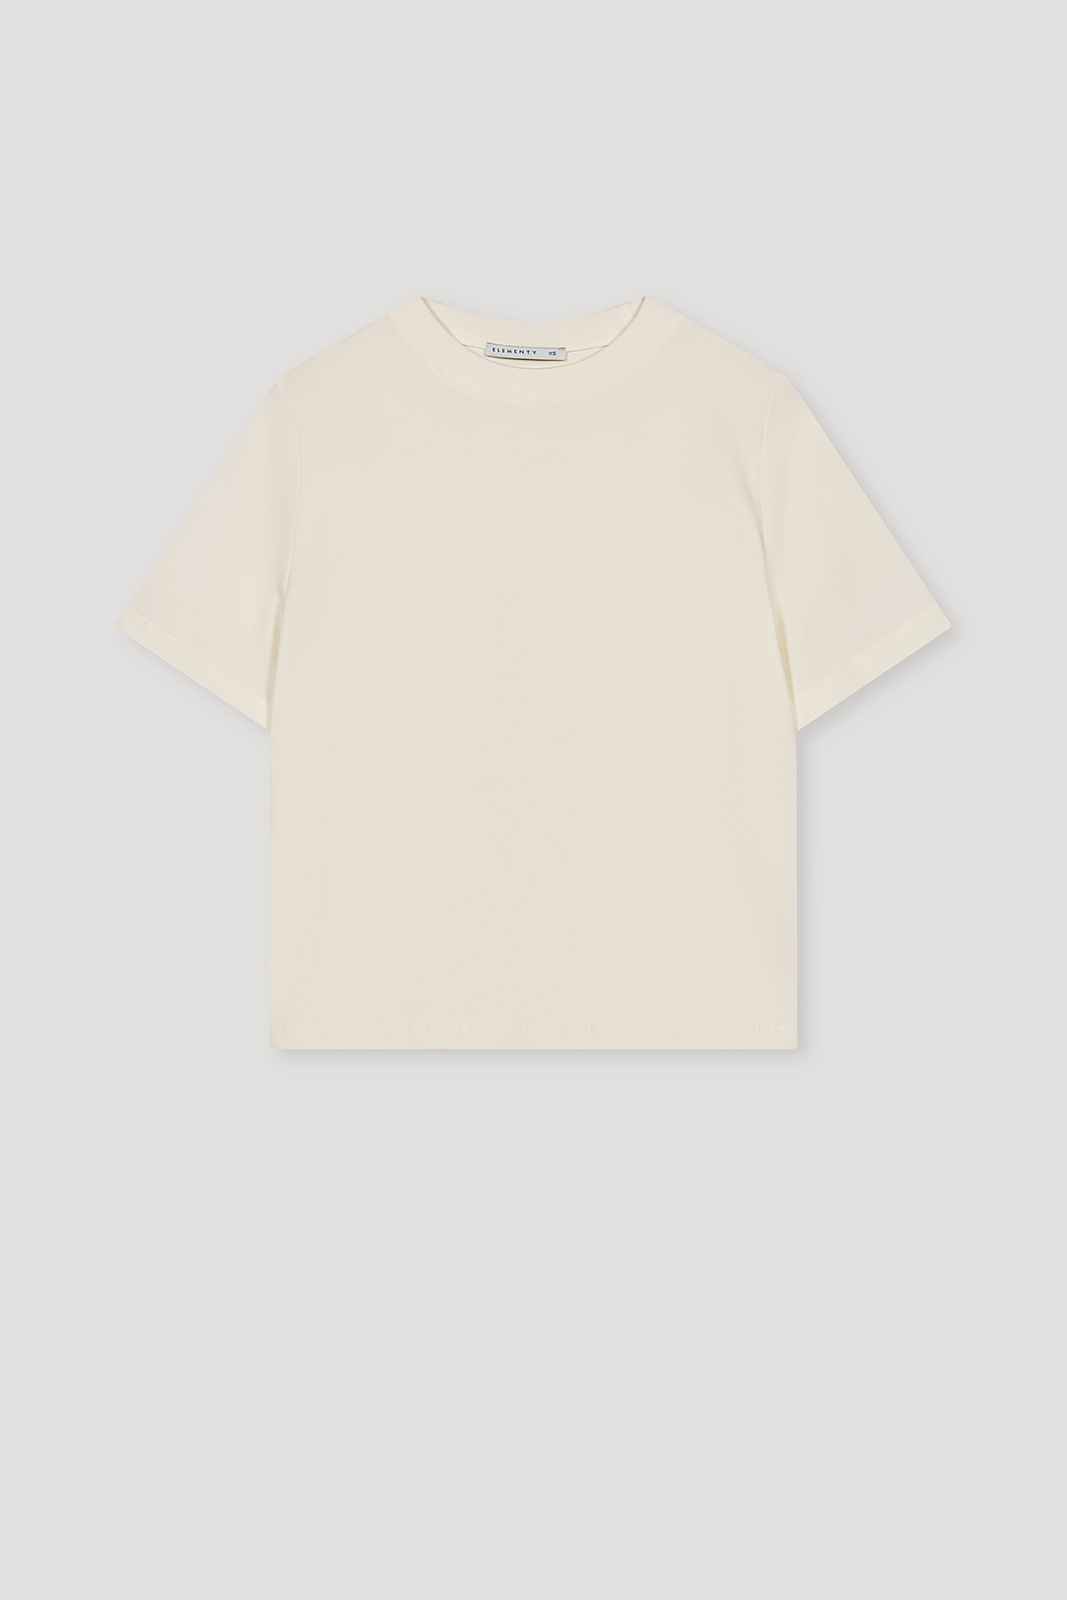 Data Lux T-shirt Vanilla 3 for 2 Elementy